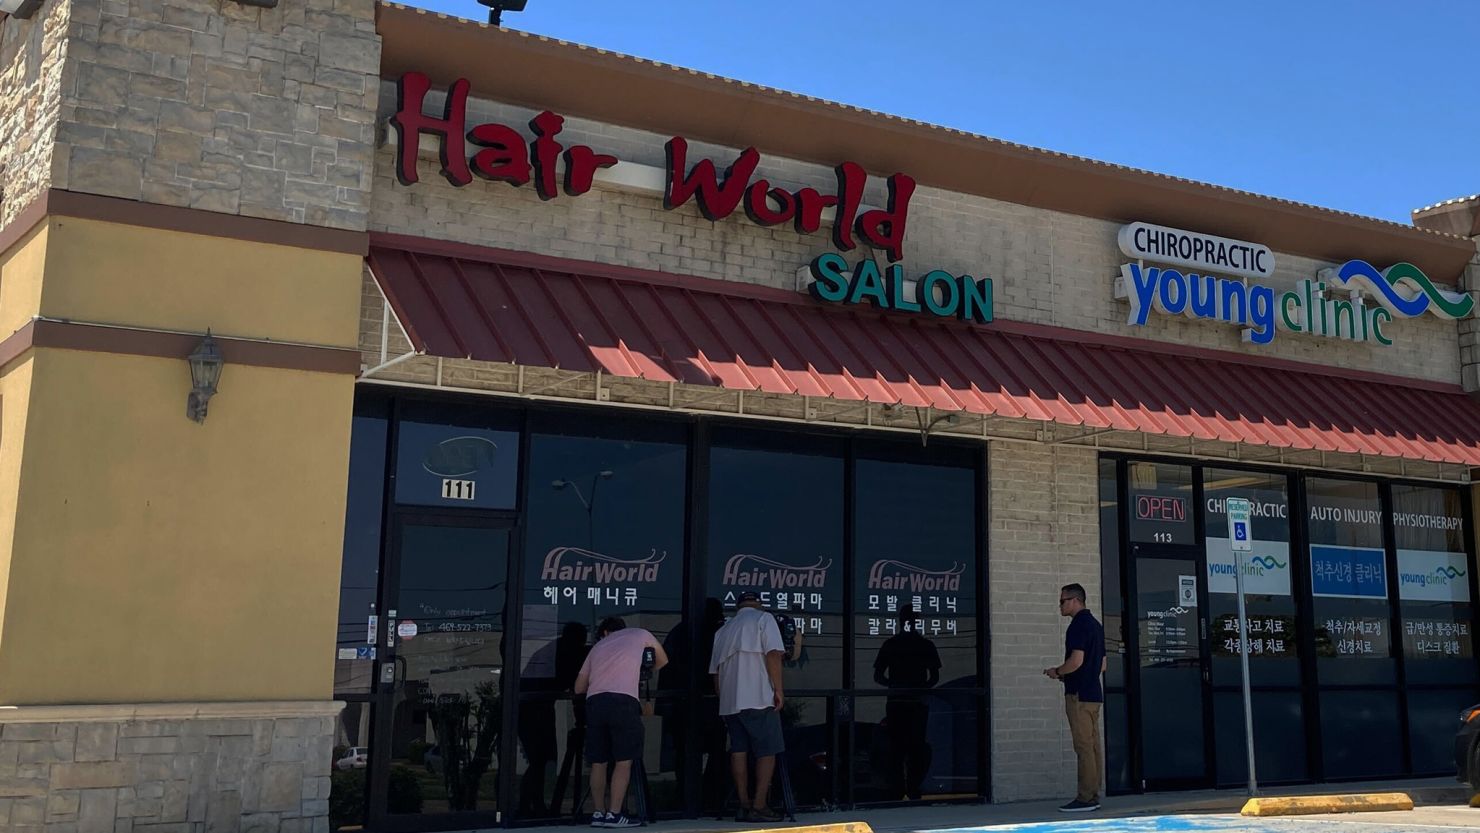 The May 11 shooting happened at Hair World Salon in Dallas.